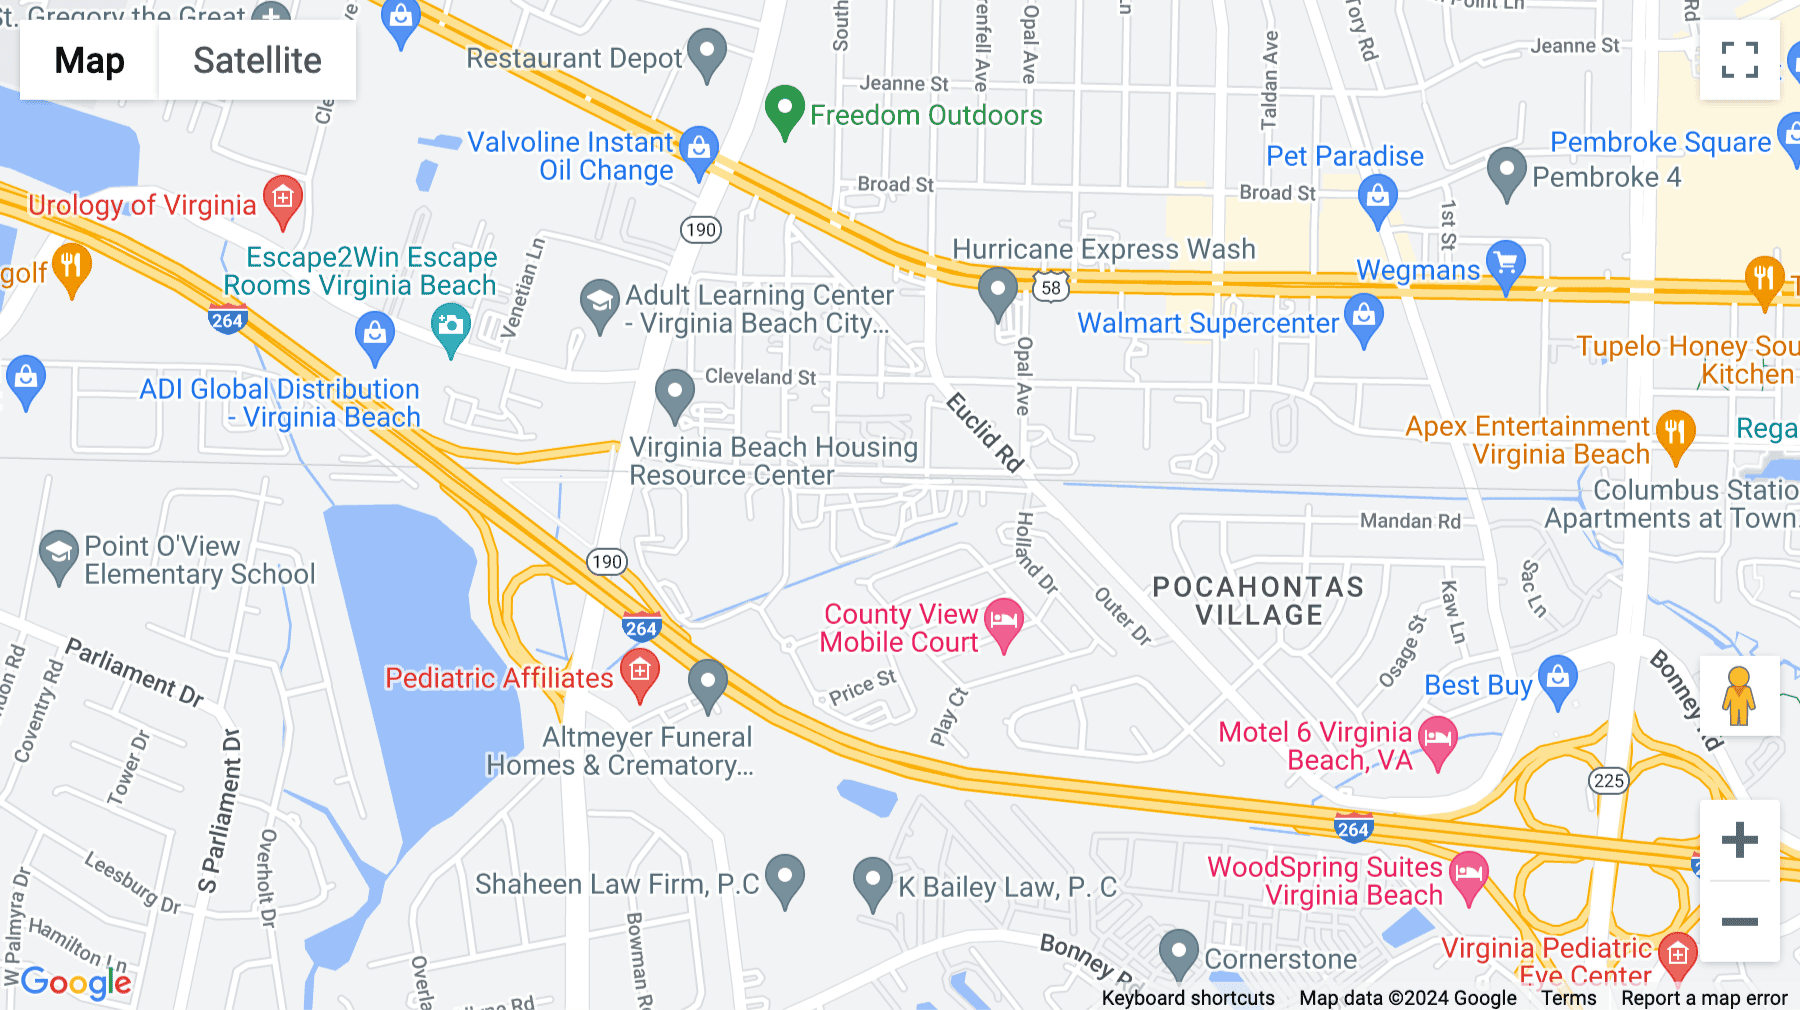 Click for interative map of 1 Columbus Centre, Suite 600, Virginia Beach, Virginia Beach